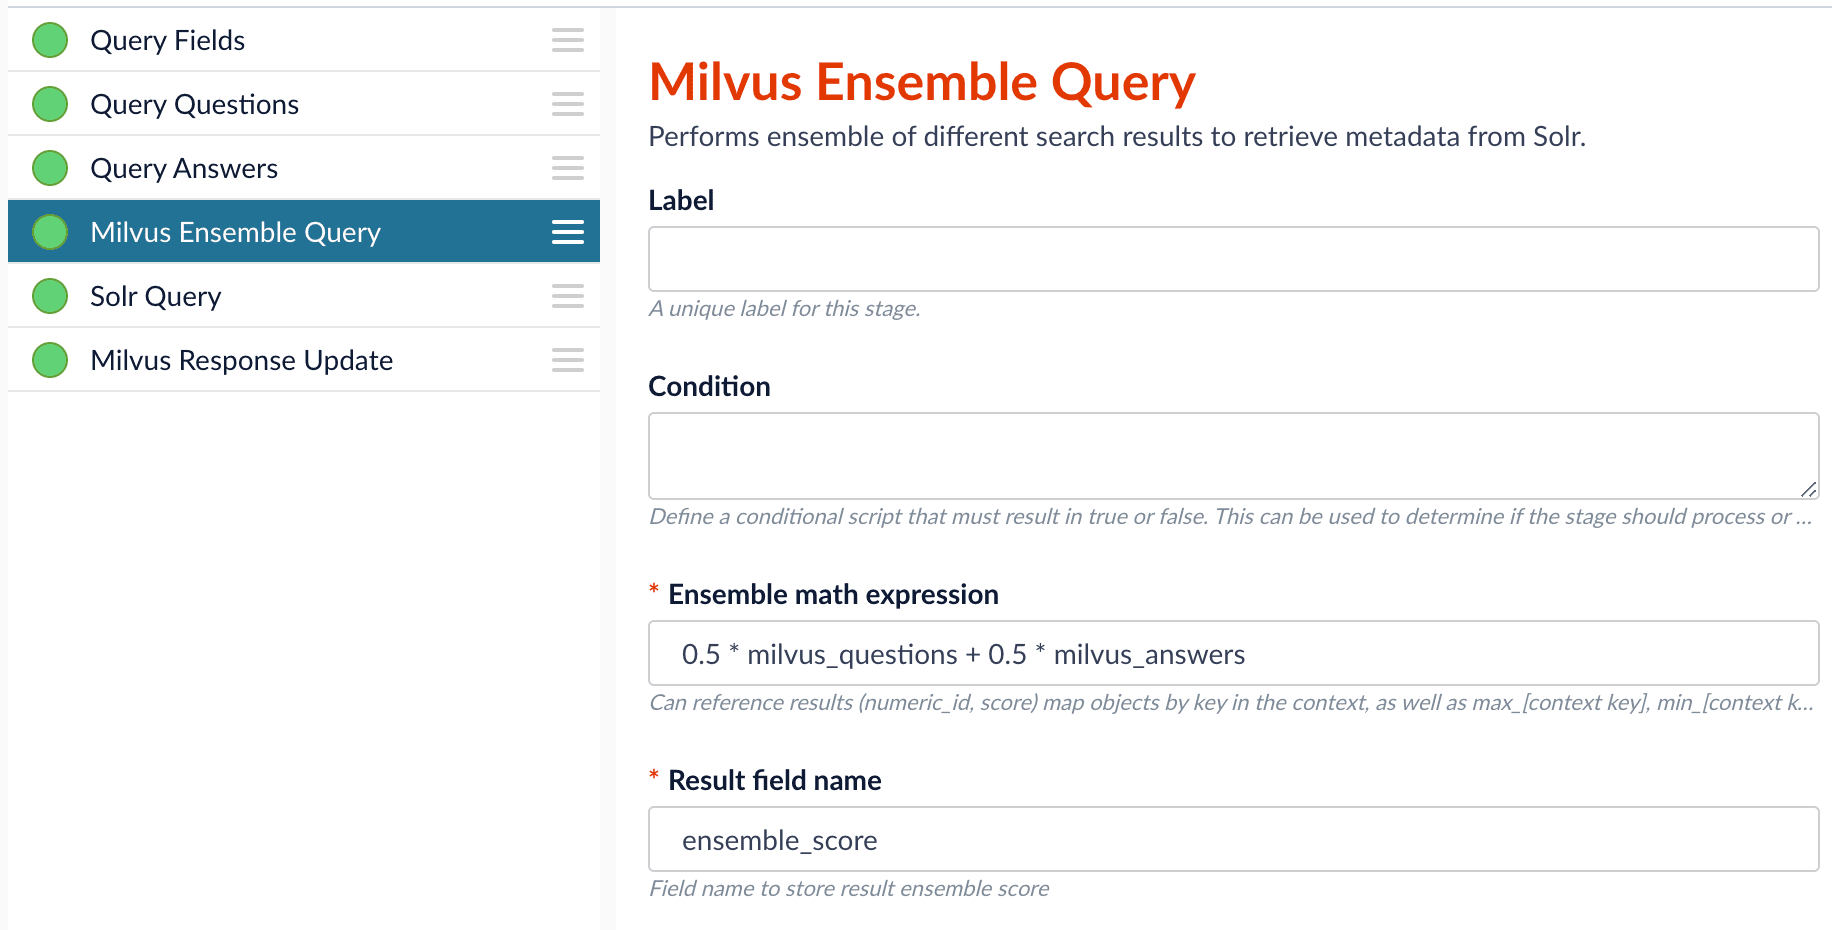 Pipeline setup example - Milvus Ensemble Query stage